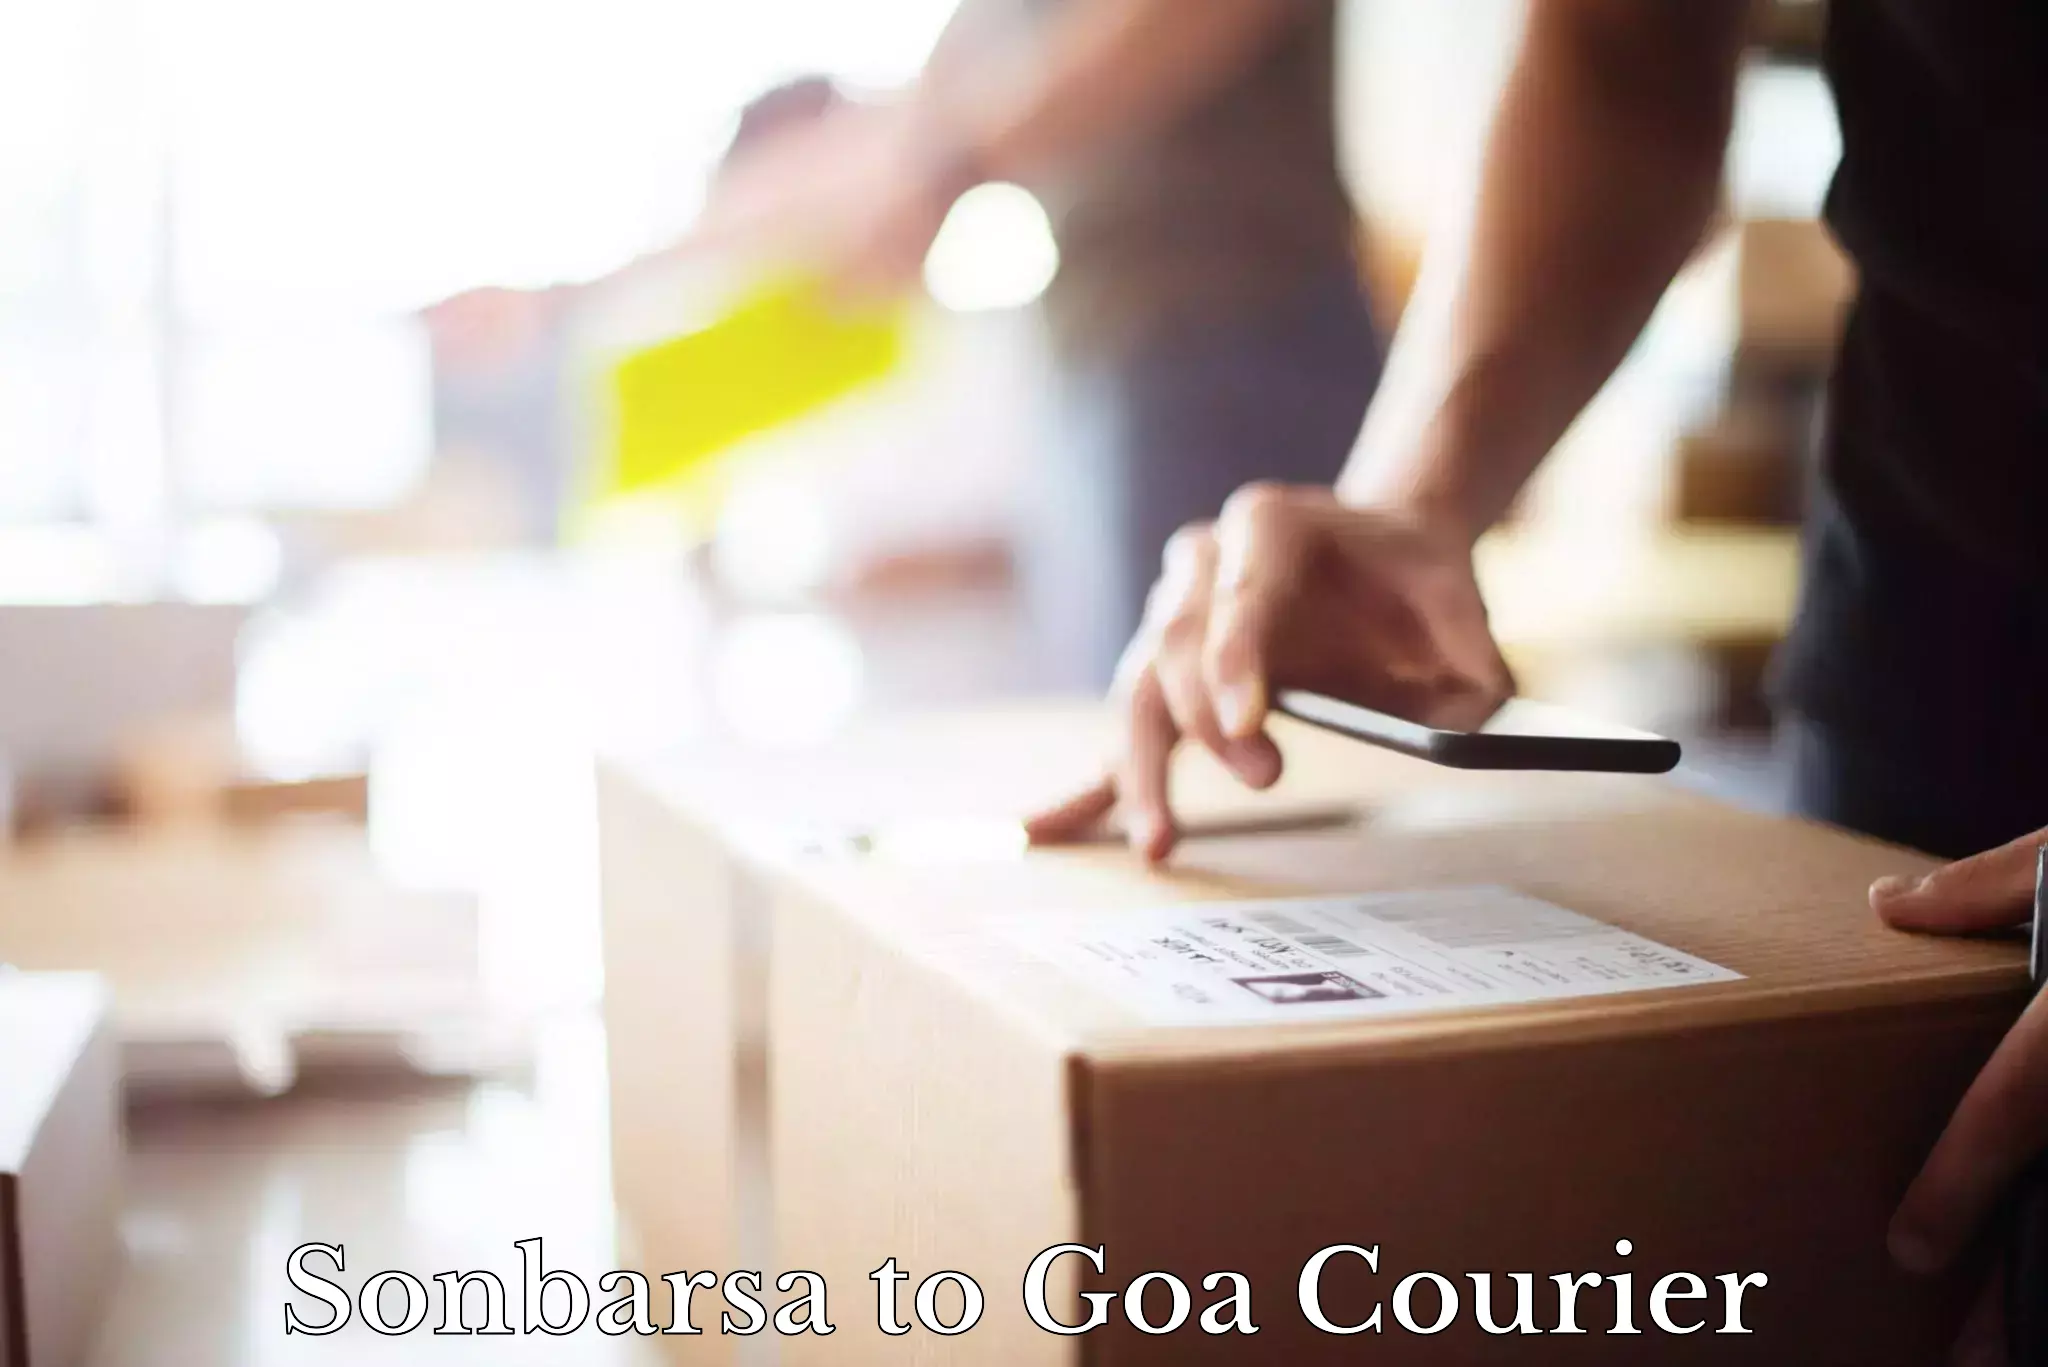 Customizable delivery plans Sonbarsa to Goa